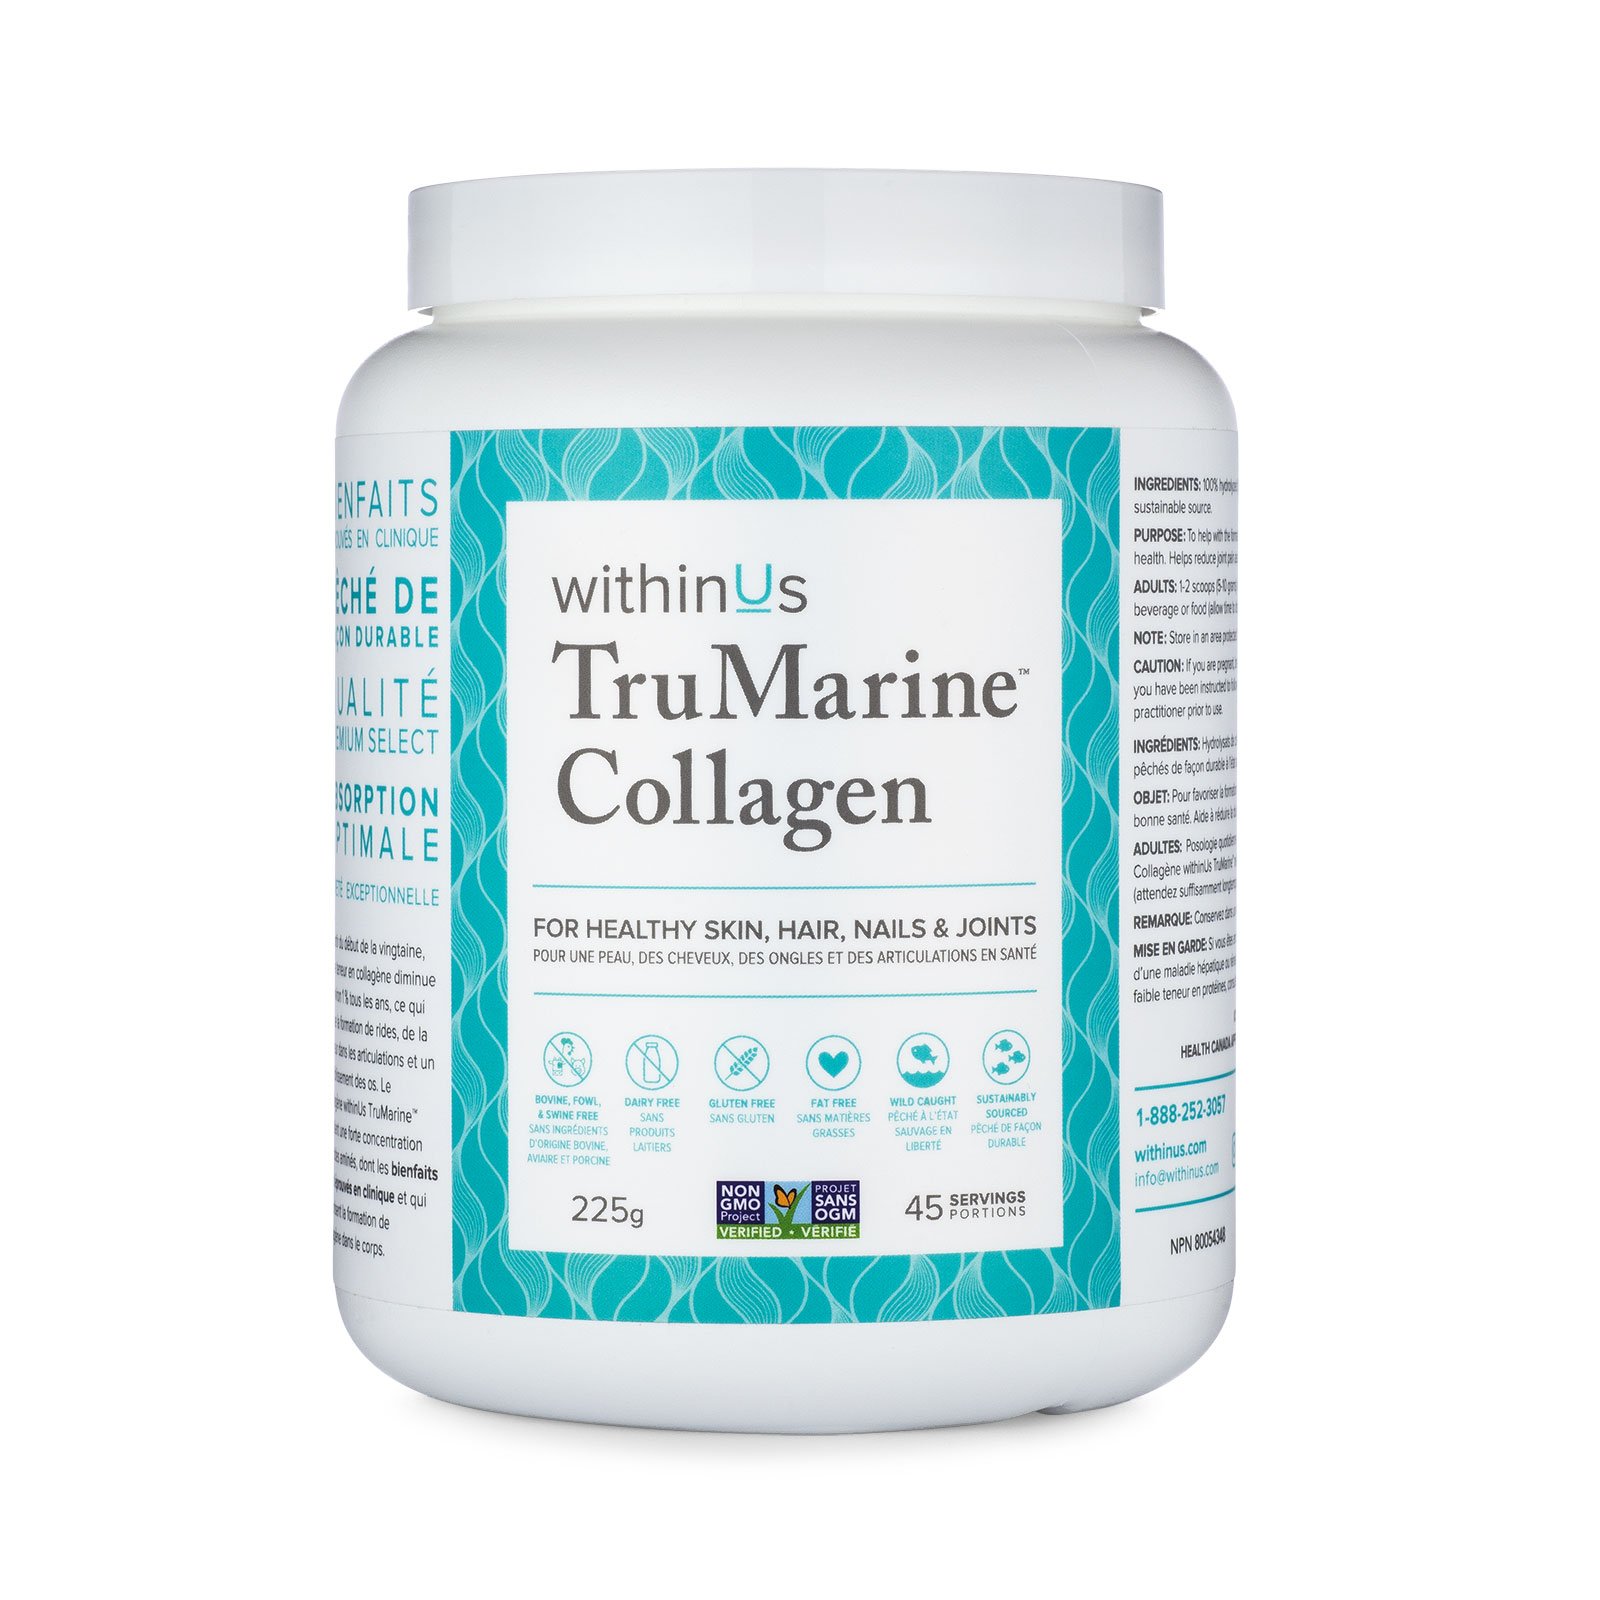 Within Us TruMarine Collagen 225g (45 Servings)